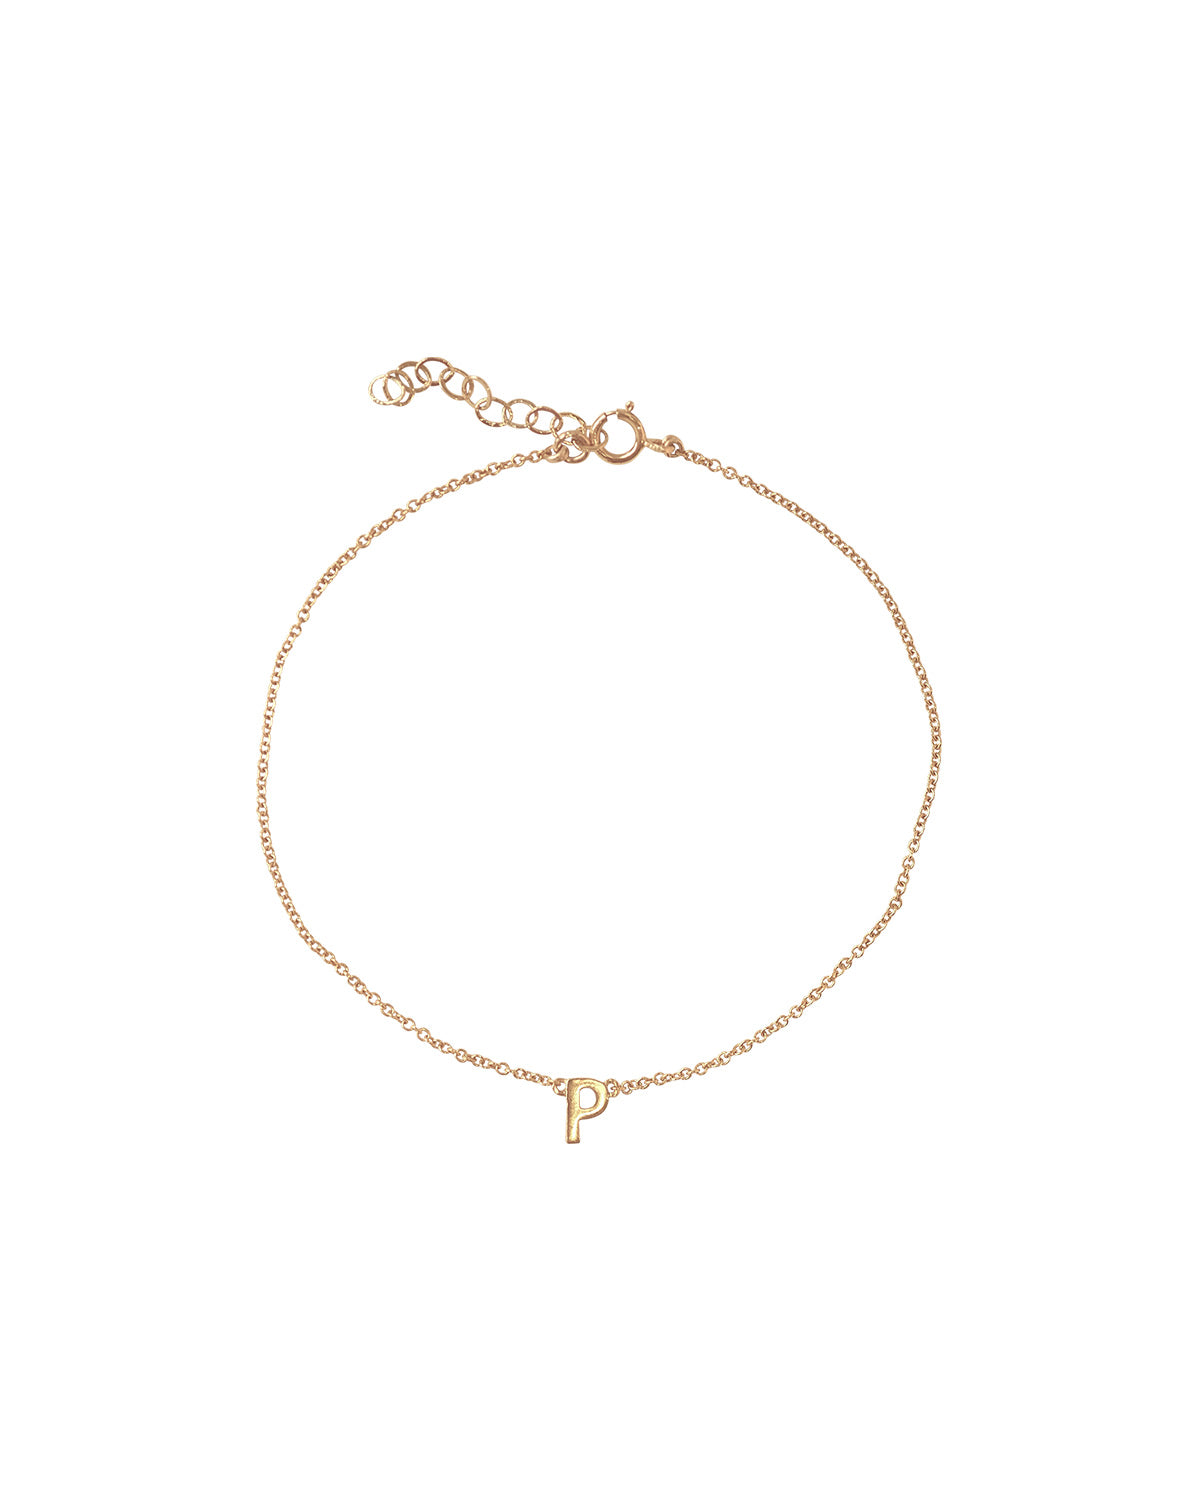 Custom Single Initial Bracelet | S-kin Studio Jewelry | Ethical Hand Made Gold Fill Jewelry